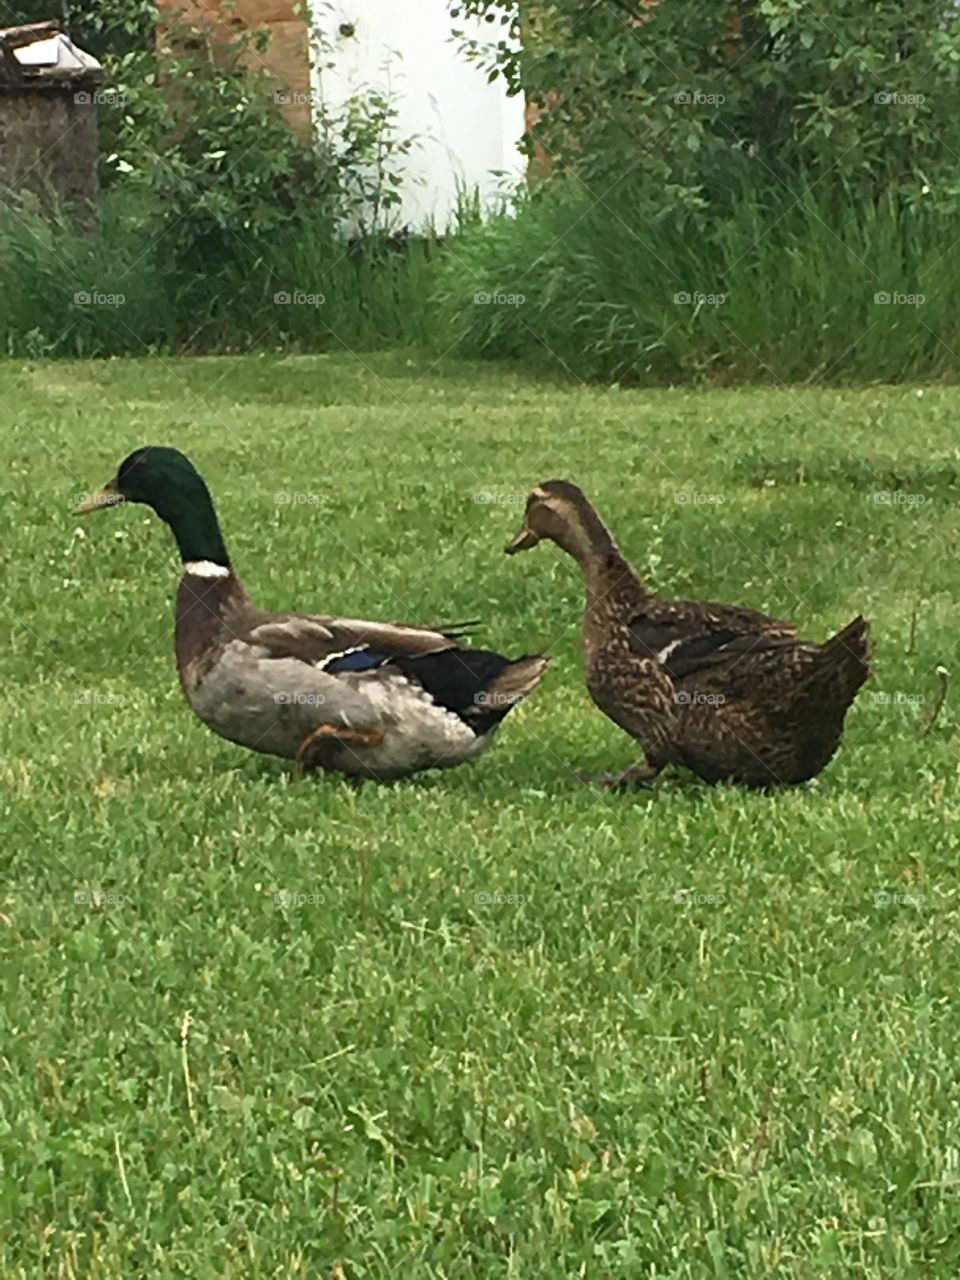 Ducks in the yard 